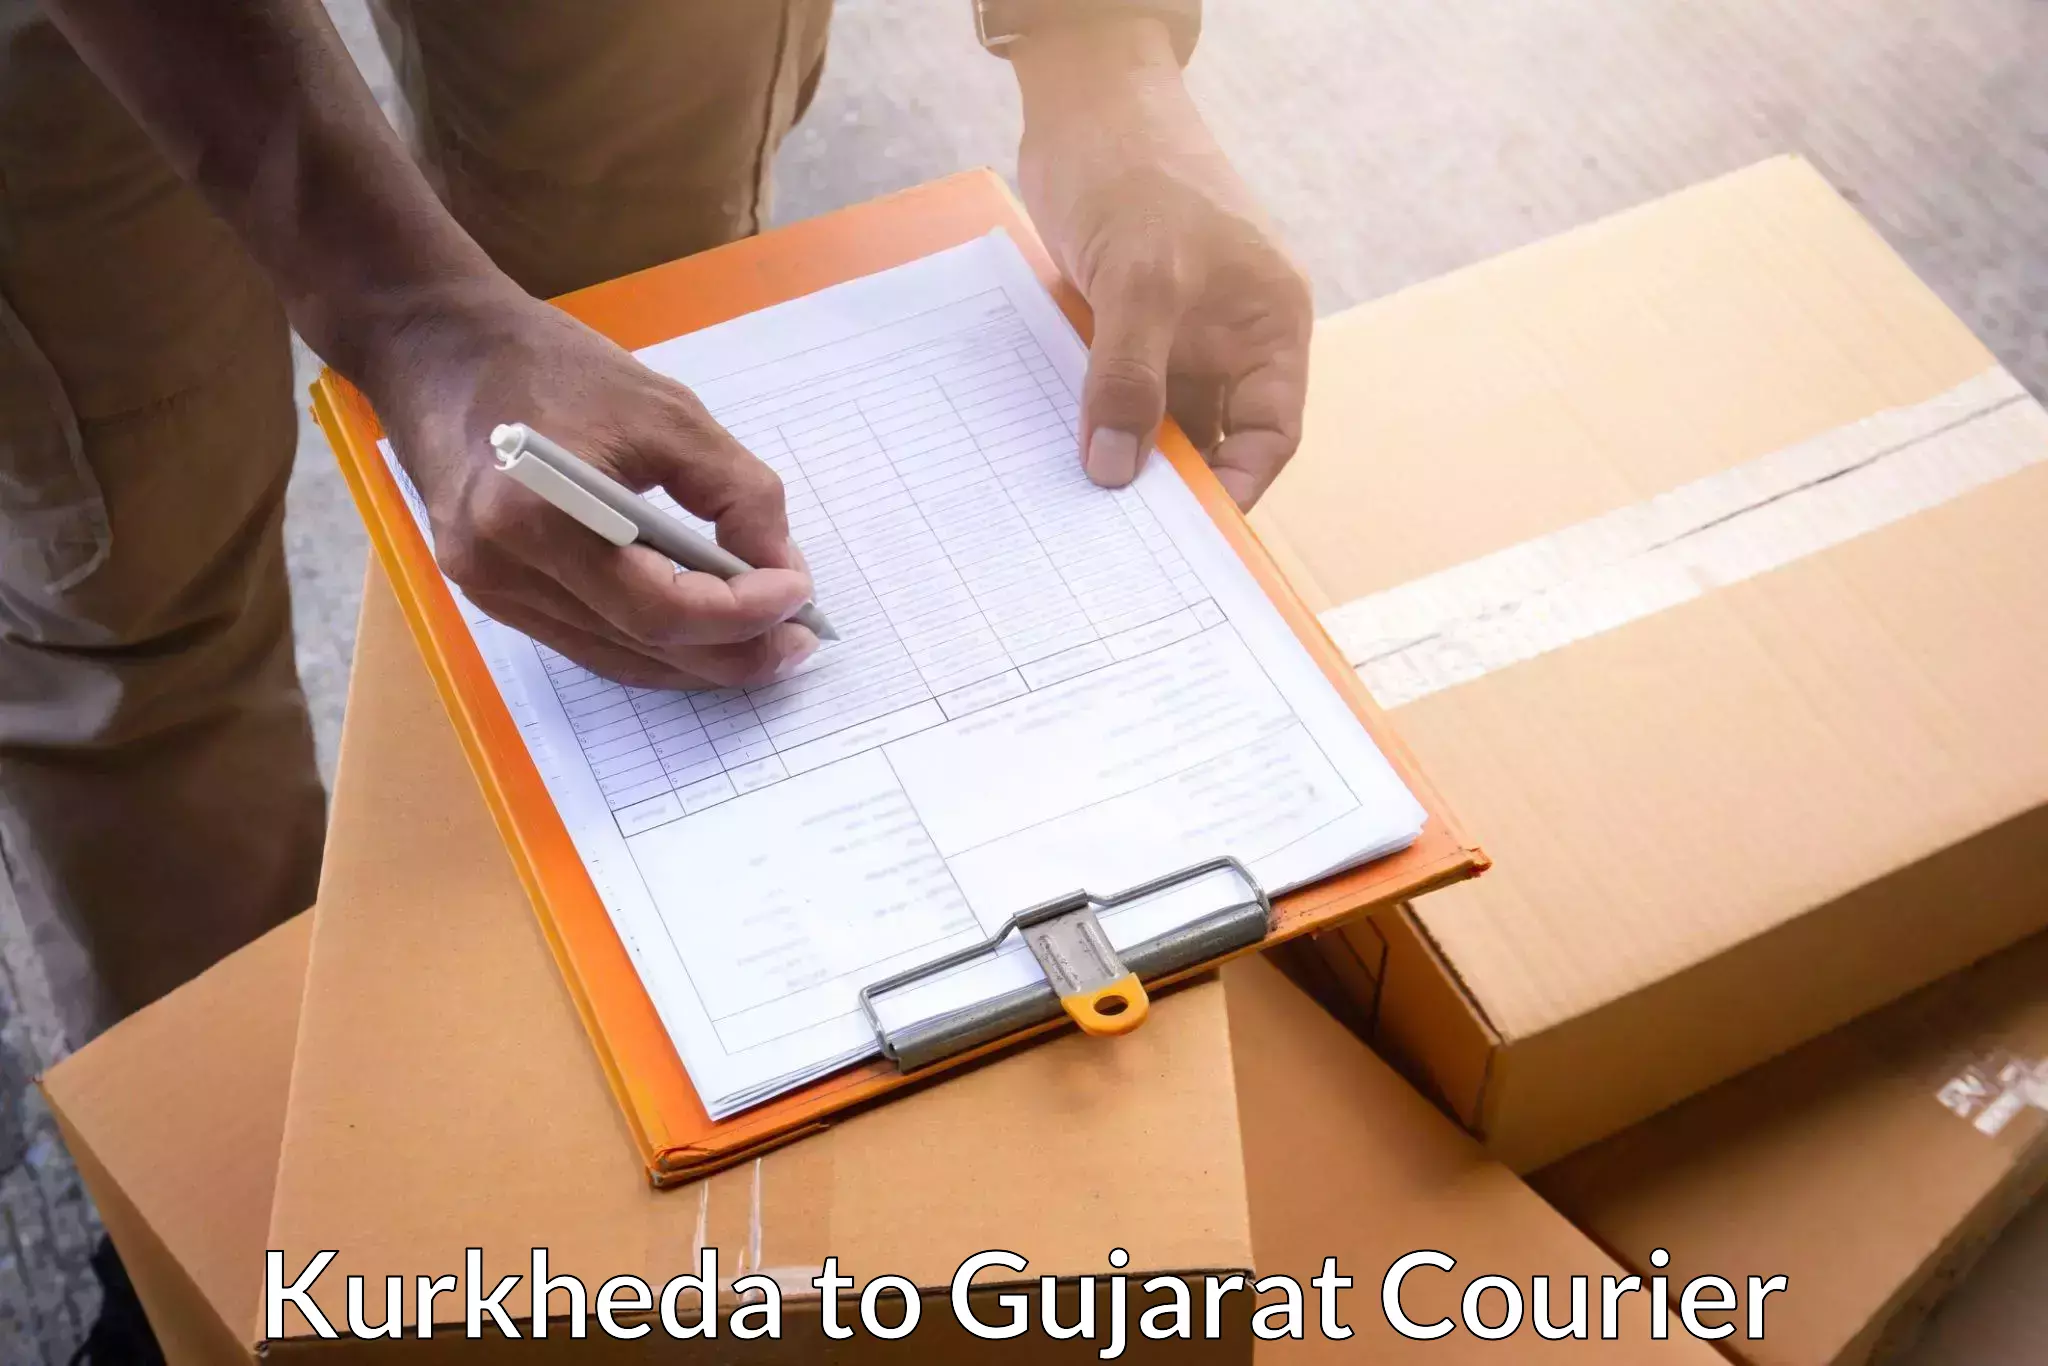 24/7 courier service in Kurkheda to Sihor